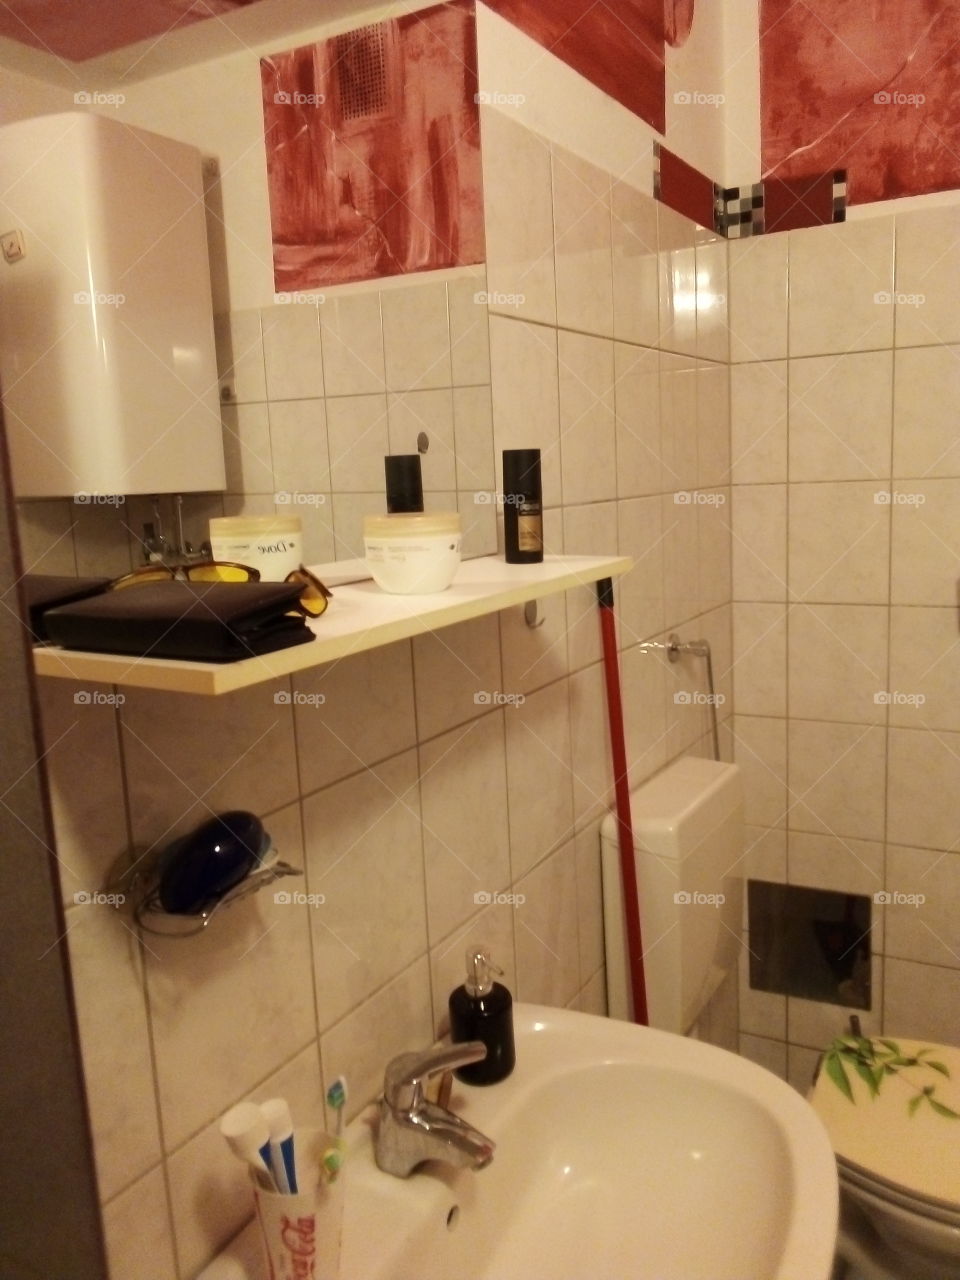 Bathroom, Mirror, Faucet, Washcloset, Lavatory